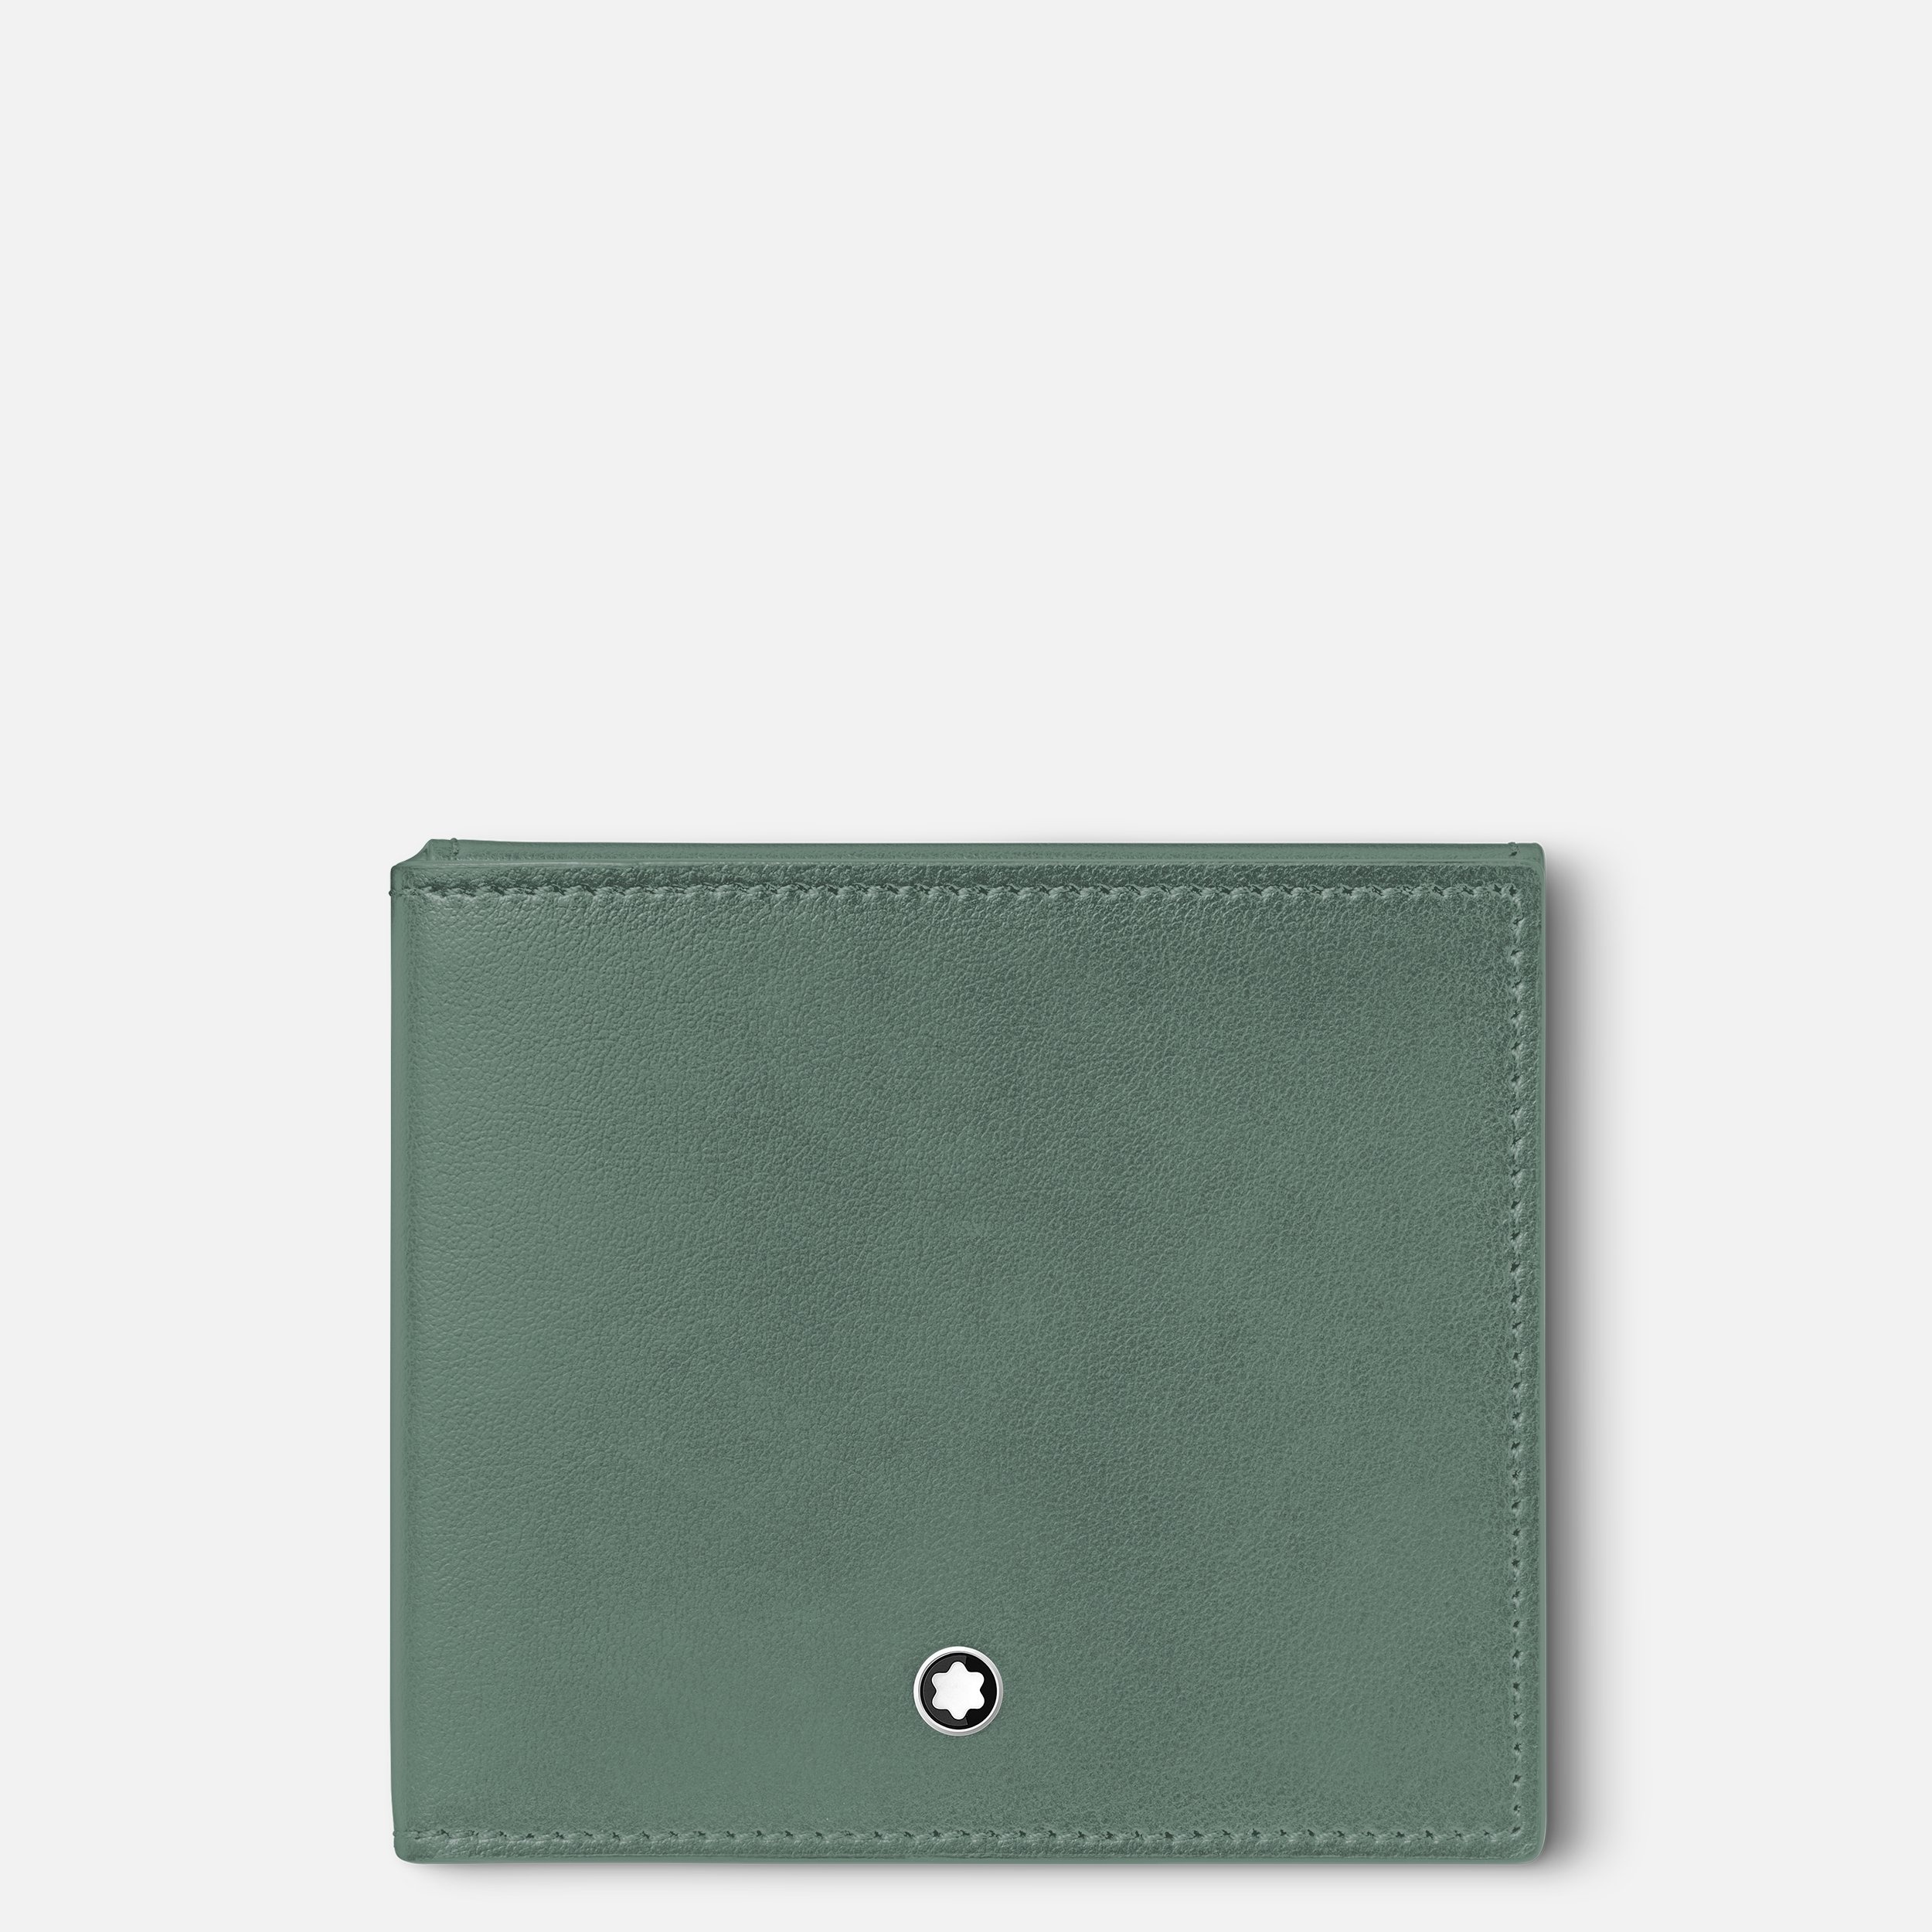 Soft trio thin wallet 4cc - 1